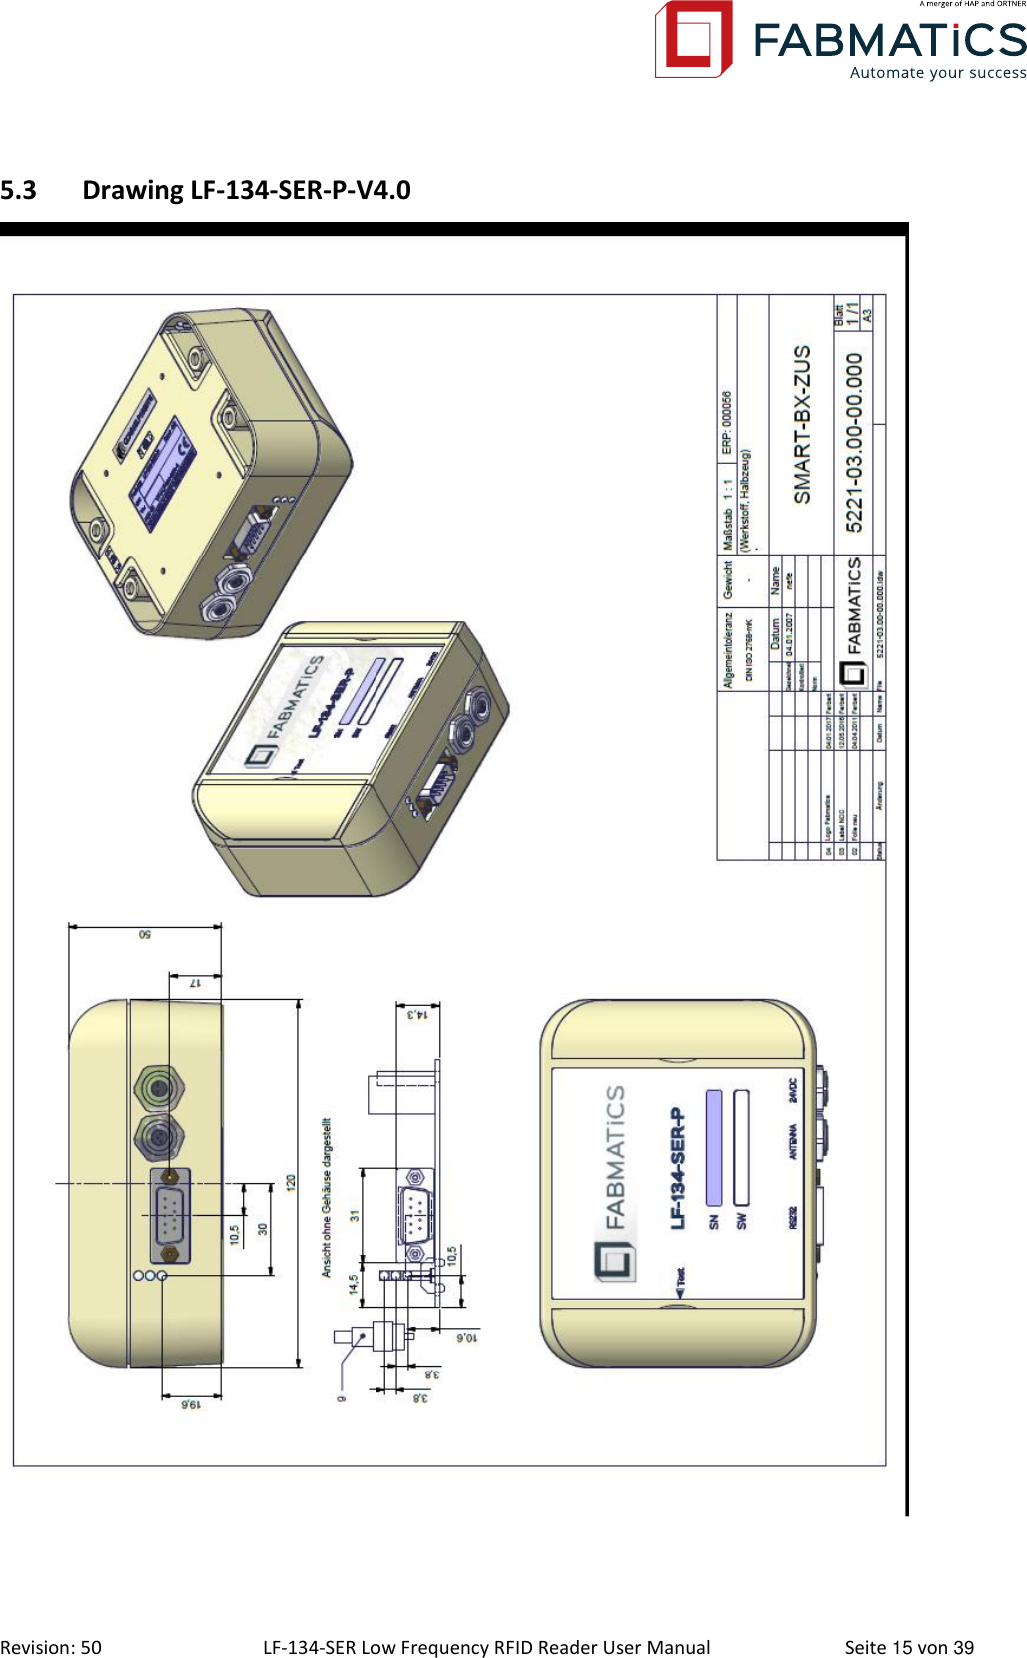  Revision: 50 LF-134-SER Low Frequency RFID Reader User Manual  Seite 15 von 39 5.3 Drawing LF-134-SER-P-V4.0     